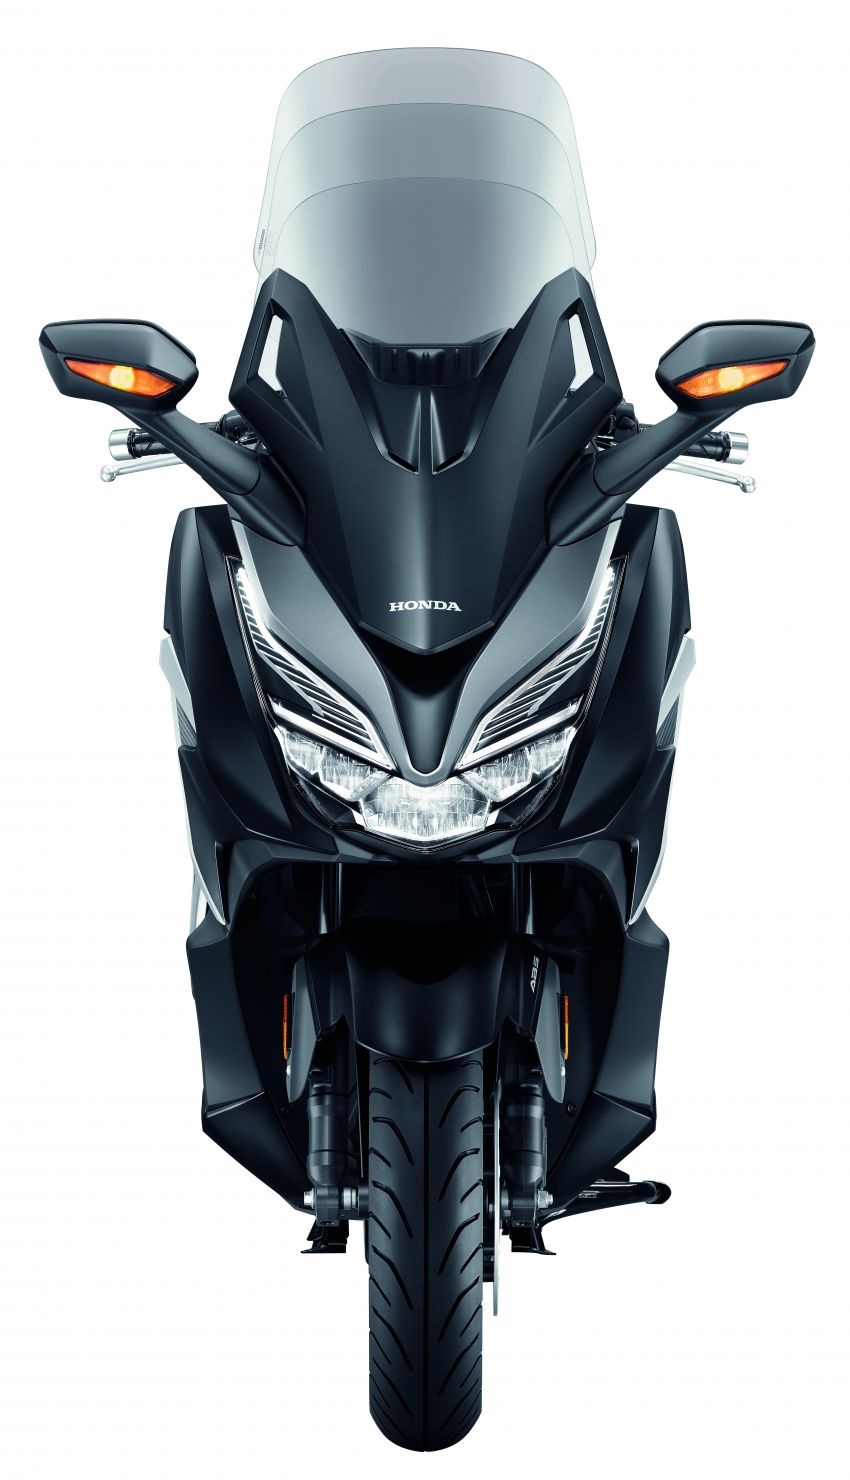 2021 Honda Forza 250 scooter in Malaysia – RM25,388 1265505